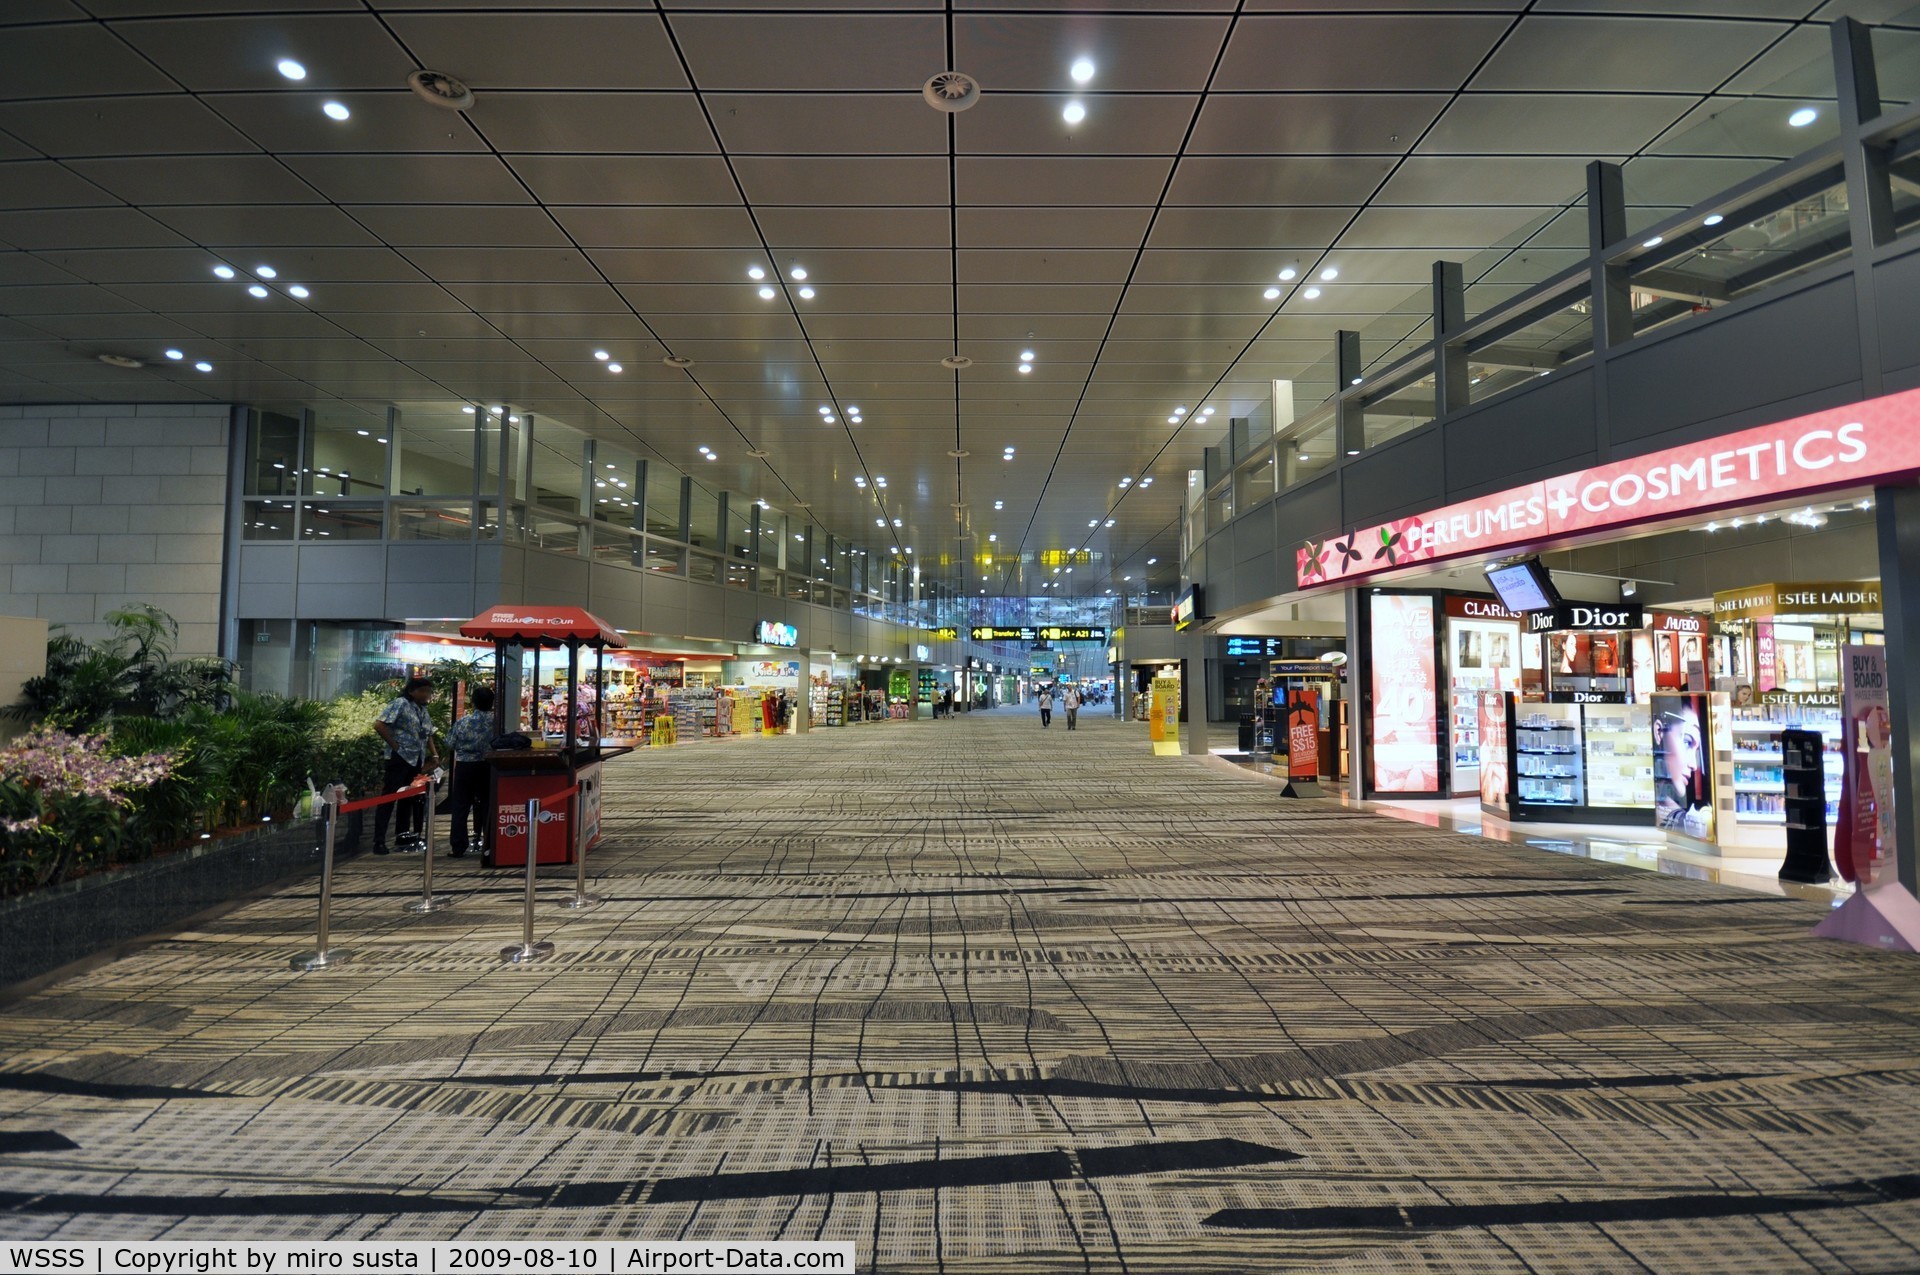 Singapore Changi Airport, Changi Singapore (WSSS) - Terminal 3, Singapore Changi International Airport